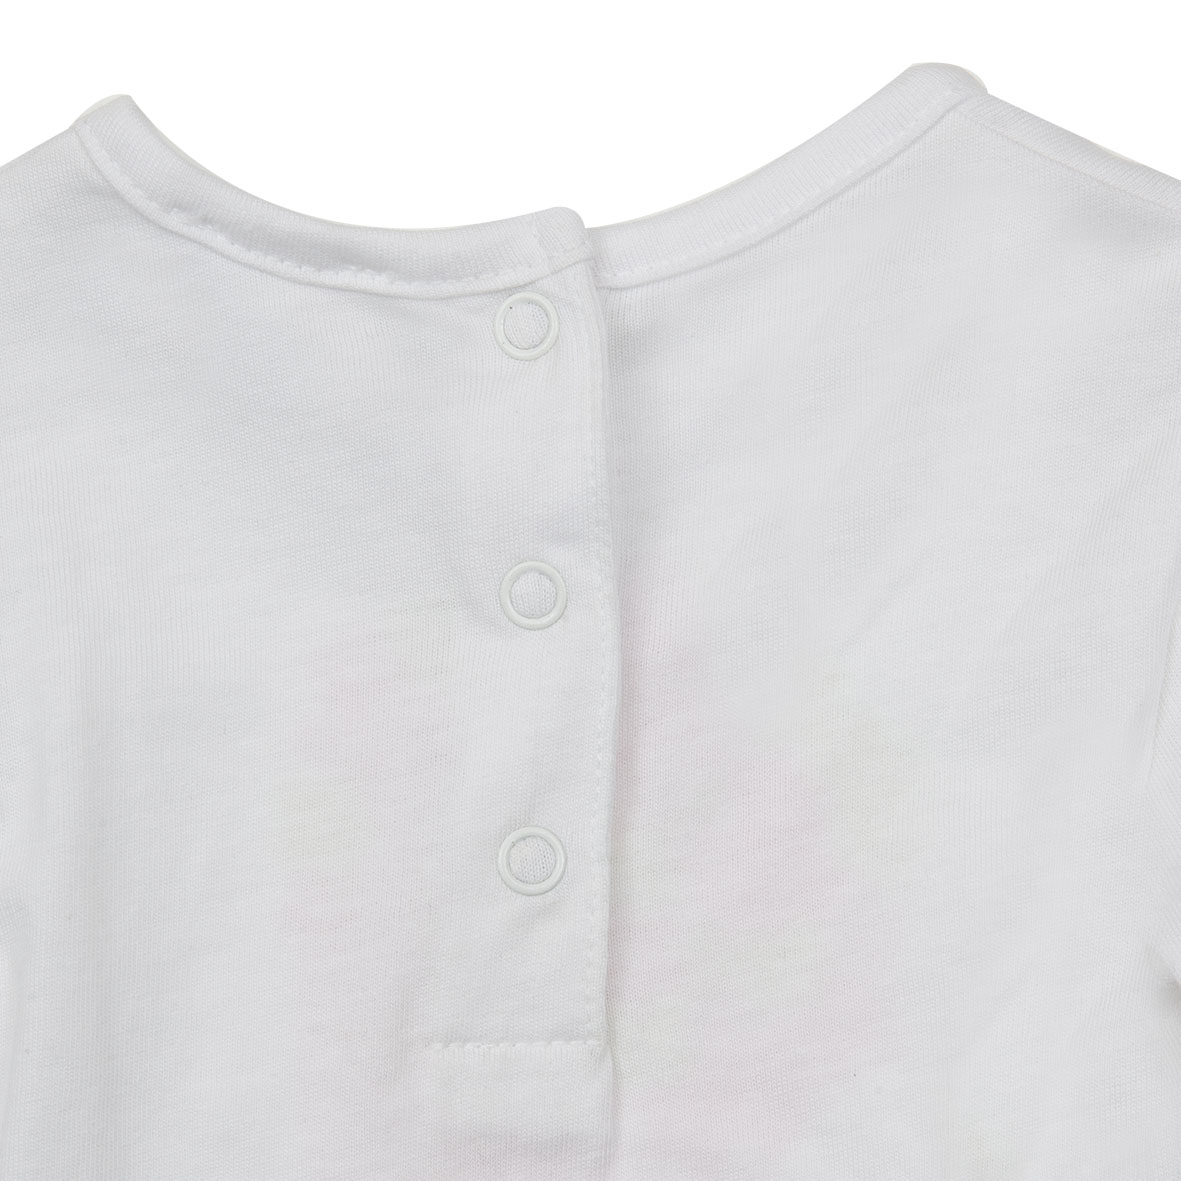 Mawi t-shirt jersey manica lunga stampa coniglio fiori 3m - Mawi